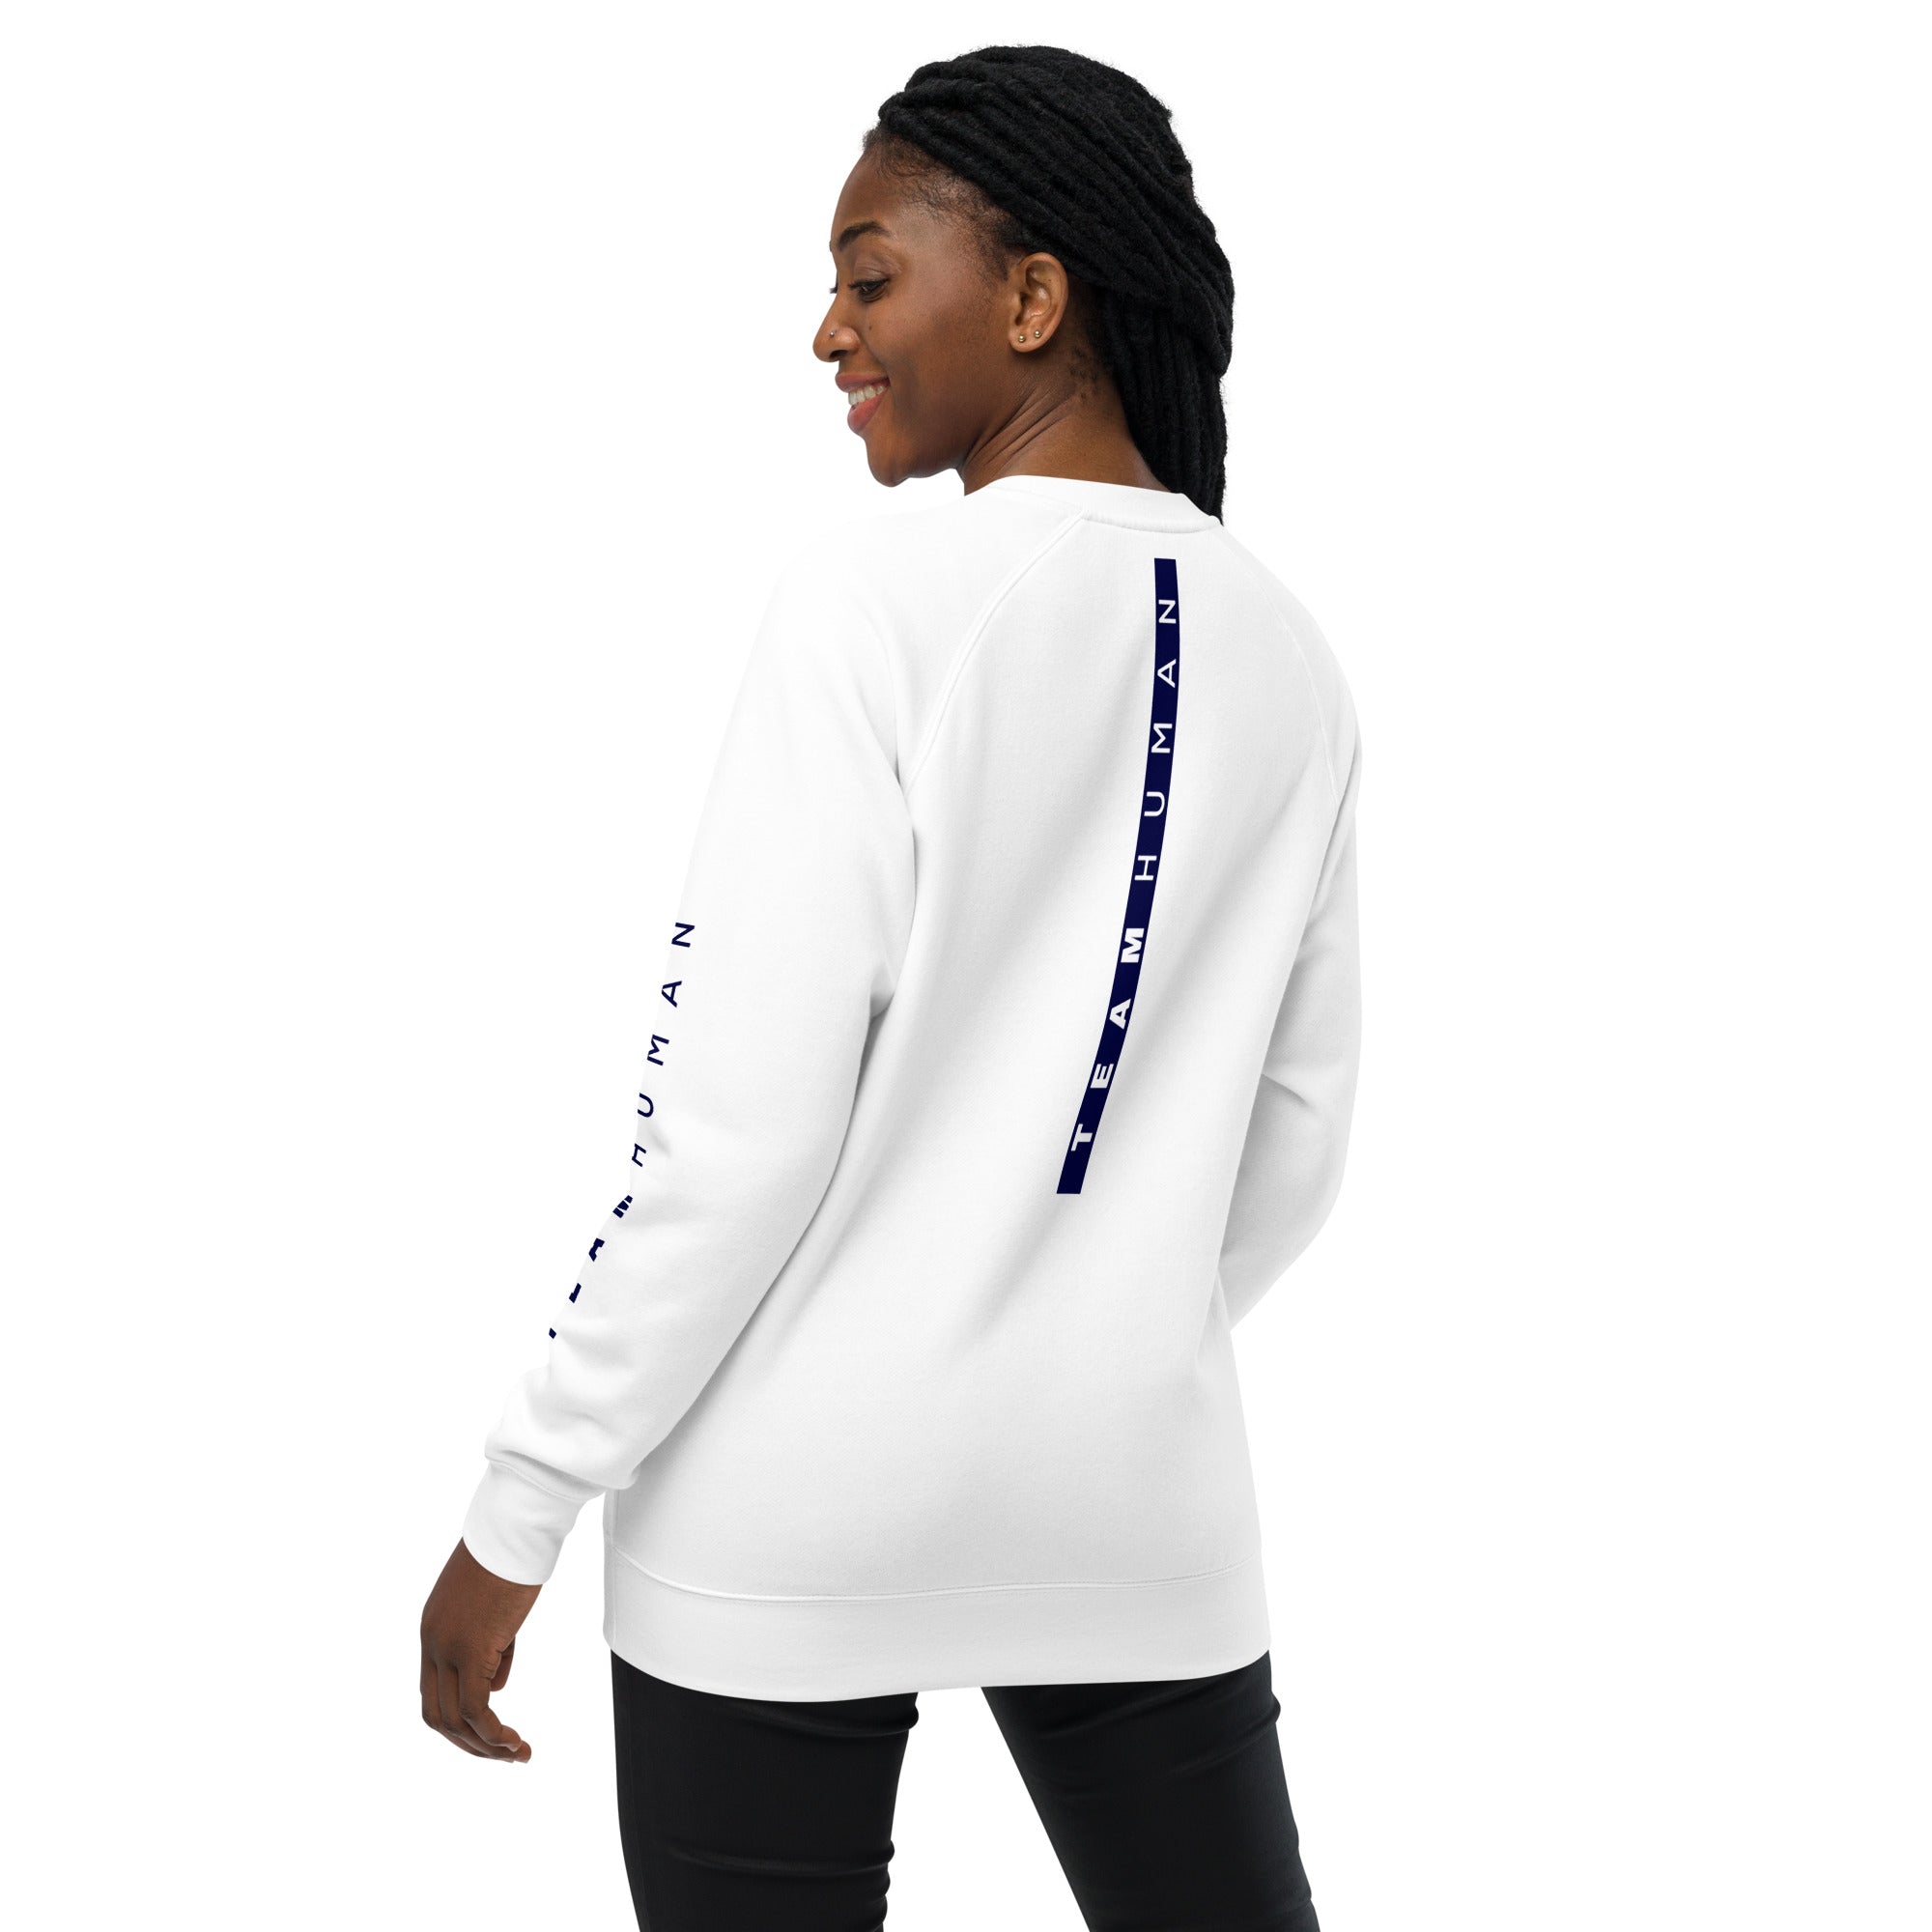 The Raglan Unisex Sweatshirt Special Edition) – Team Human